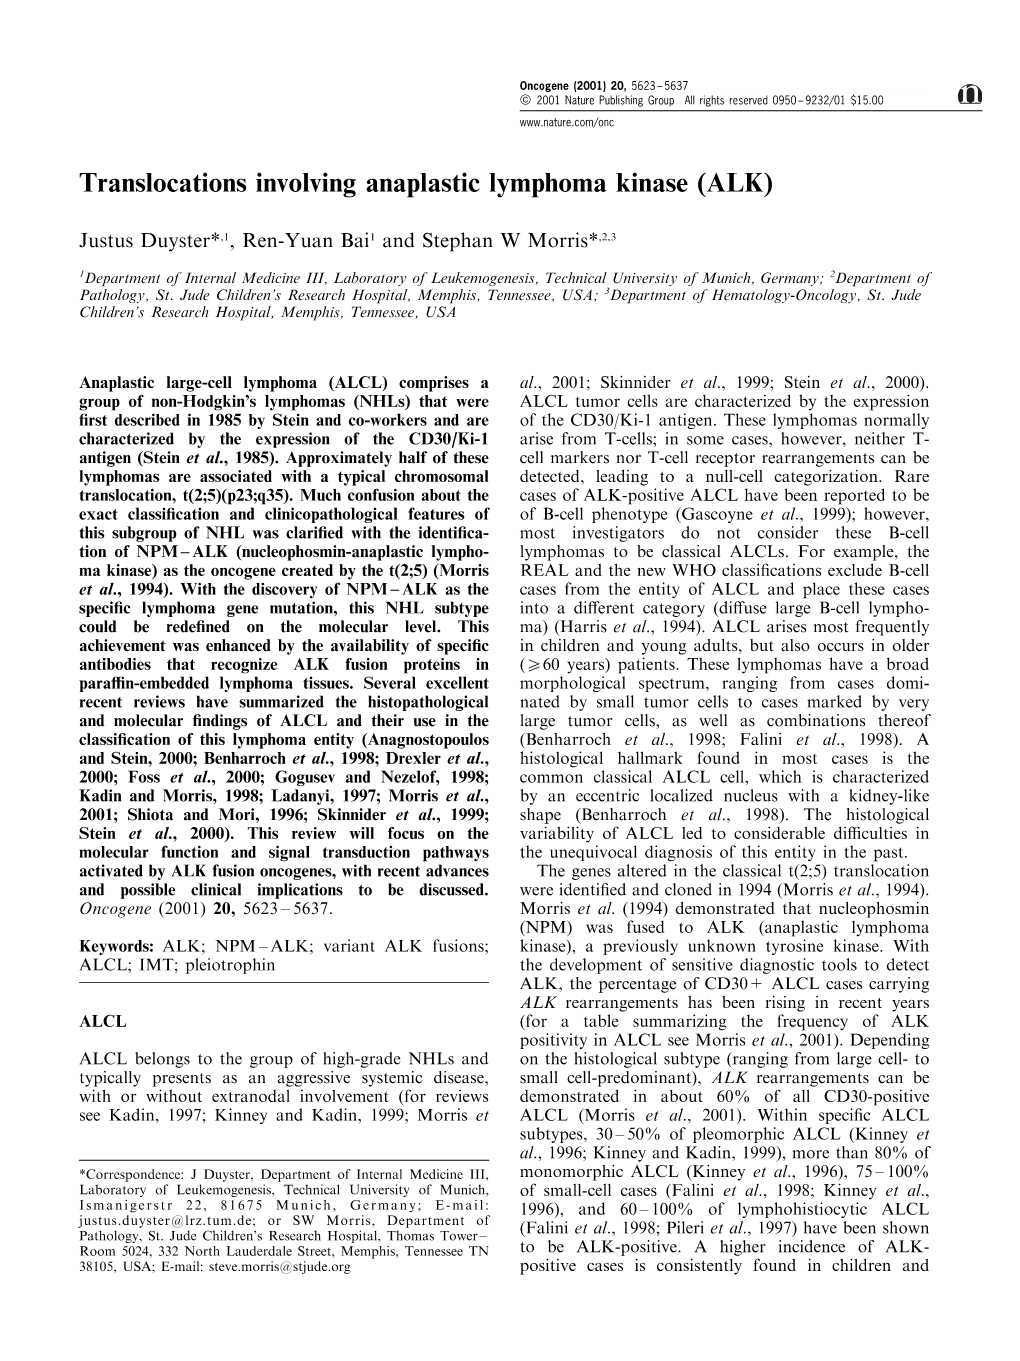 Translocations Involving Anaplastic Lymphoma Kinase (ALK)